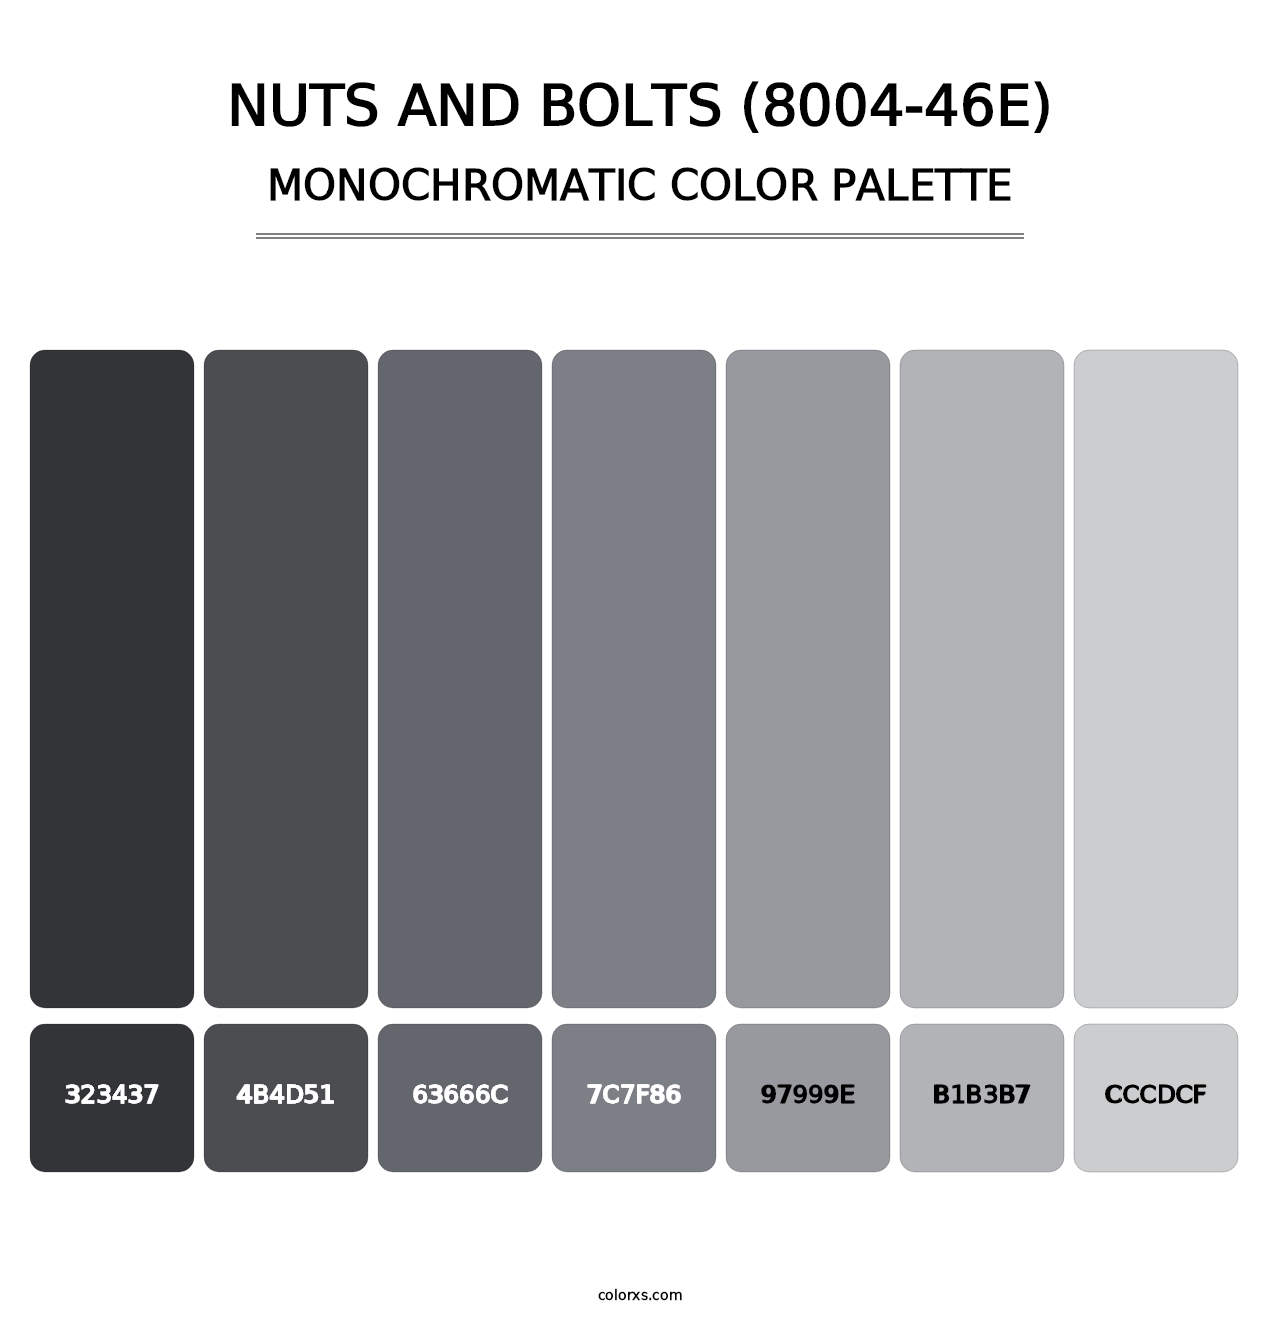 Nuts and Bolts (8004-46E) - Monochromatic Color Palette